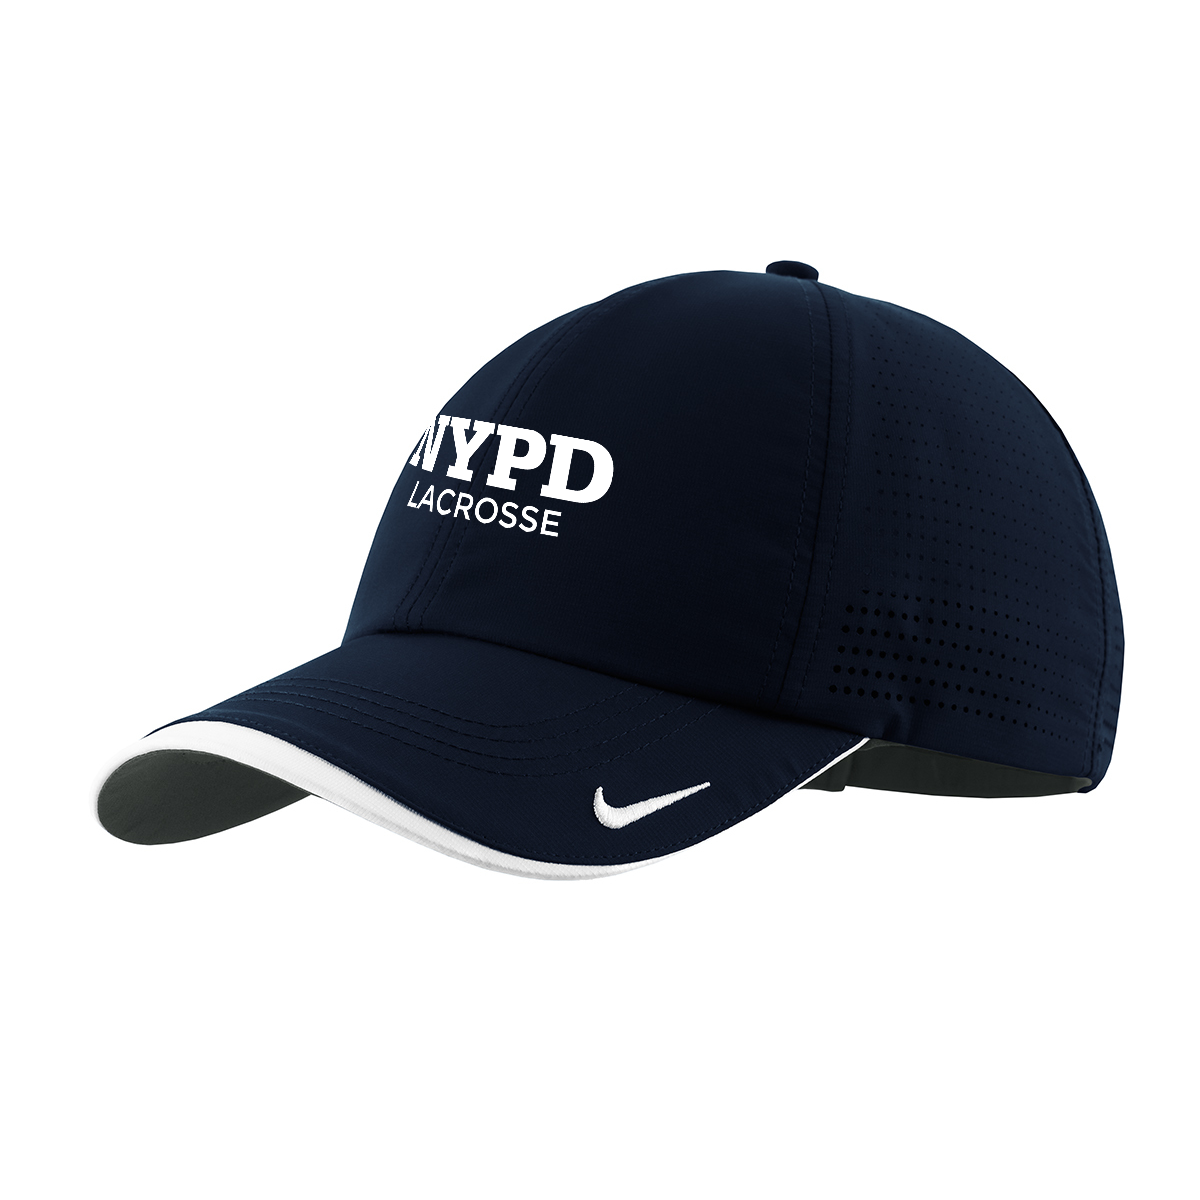 NYPD Lacrosse Nike Swoosh Cap